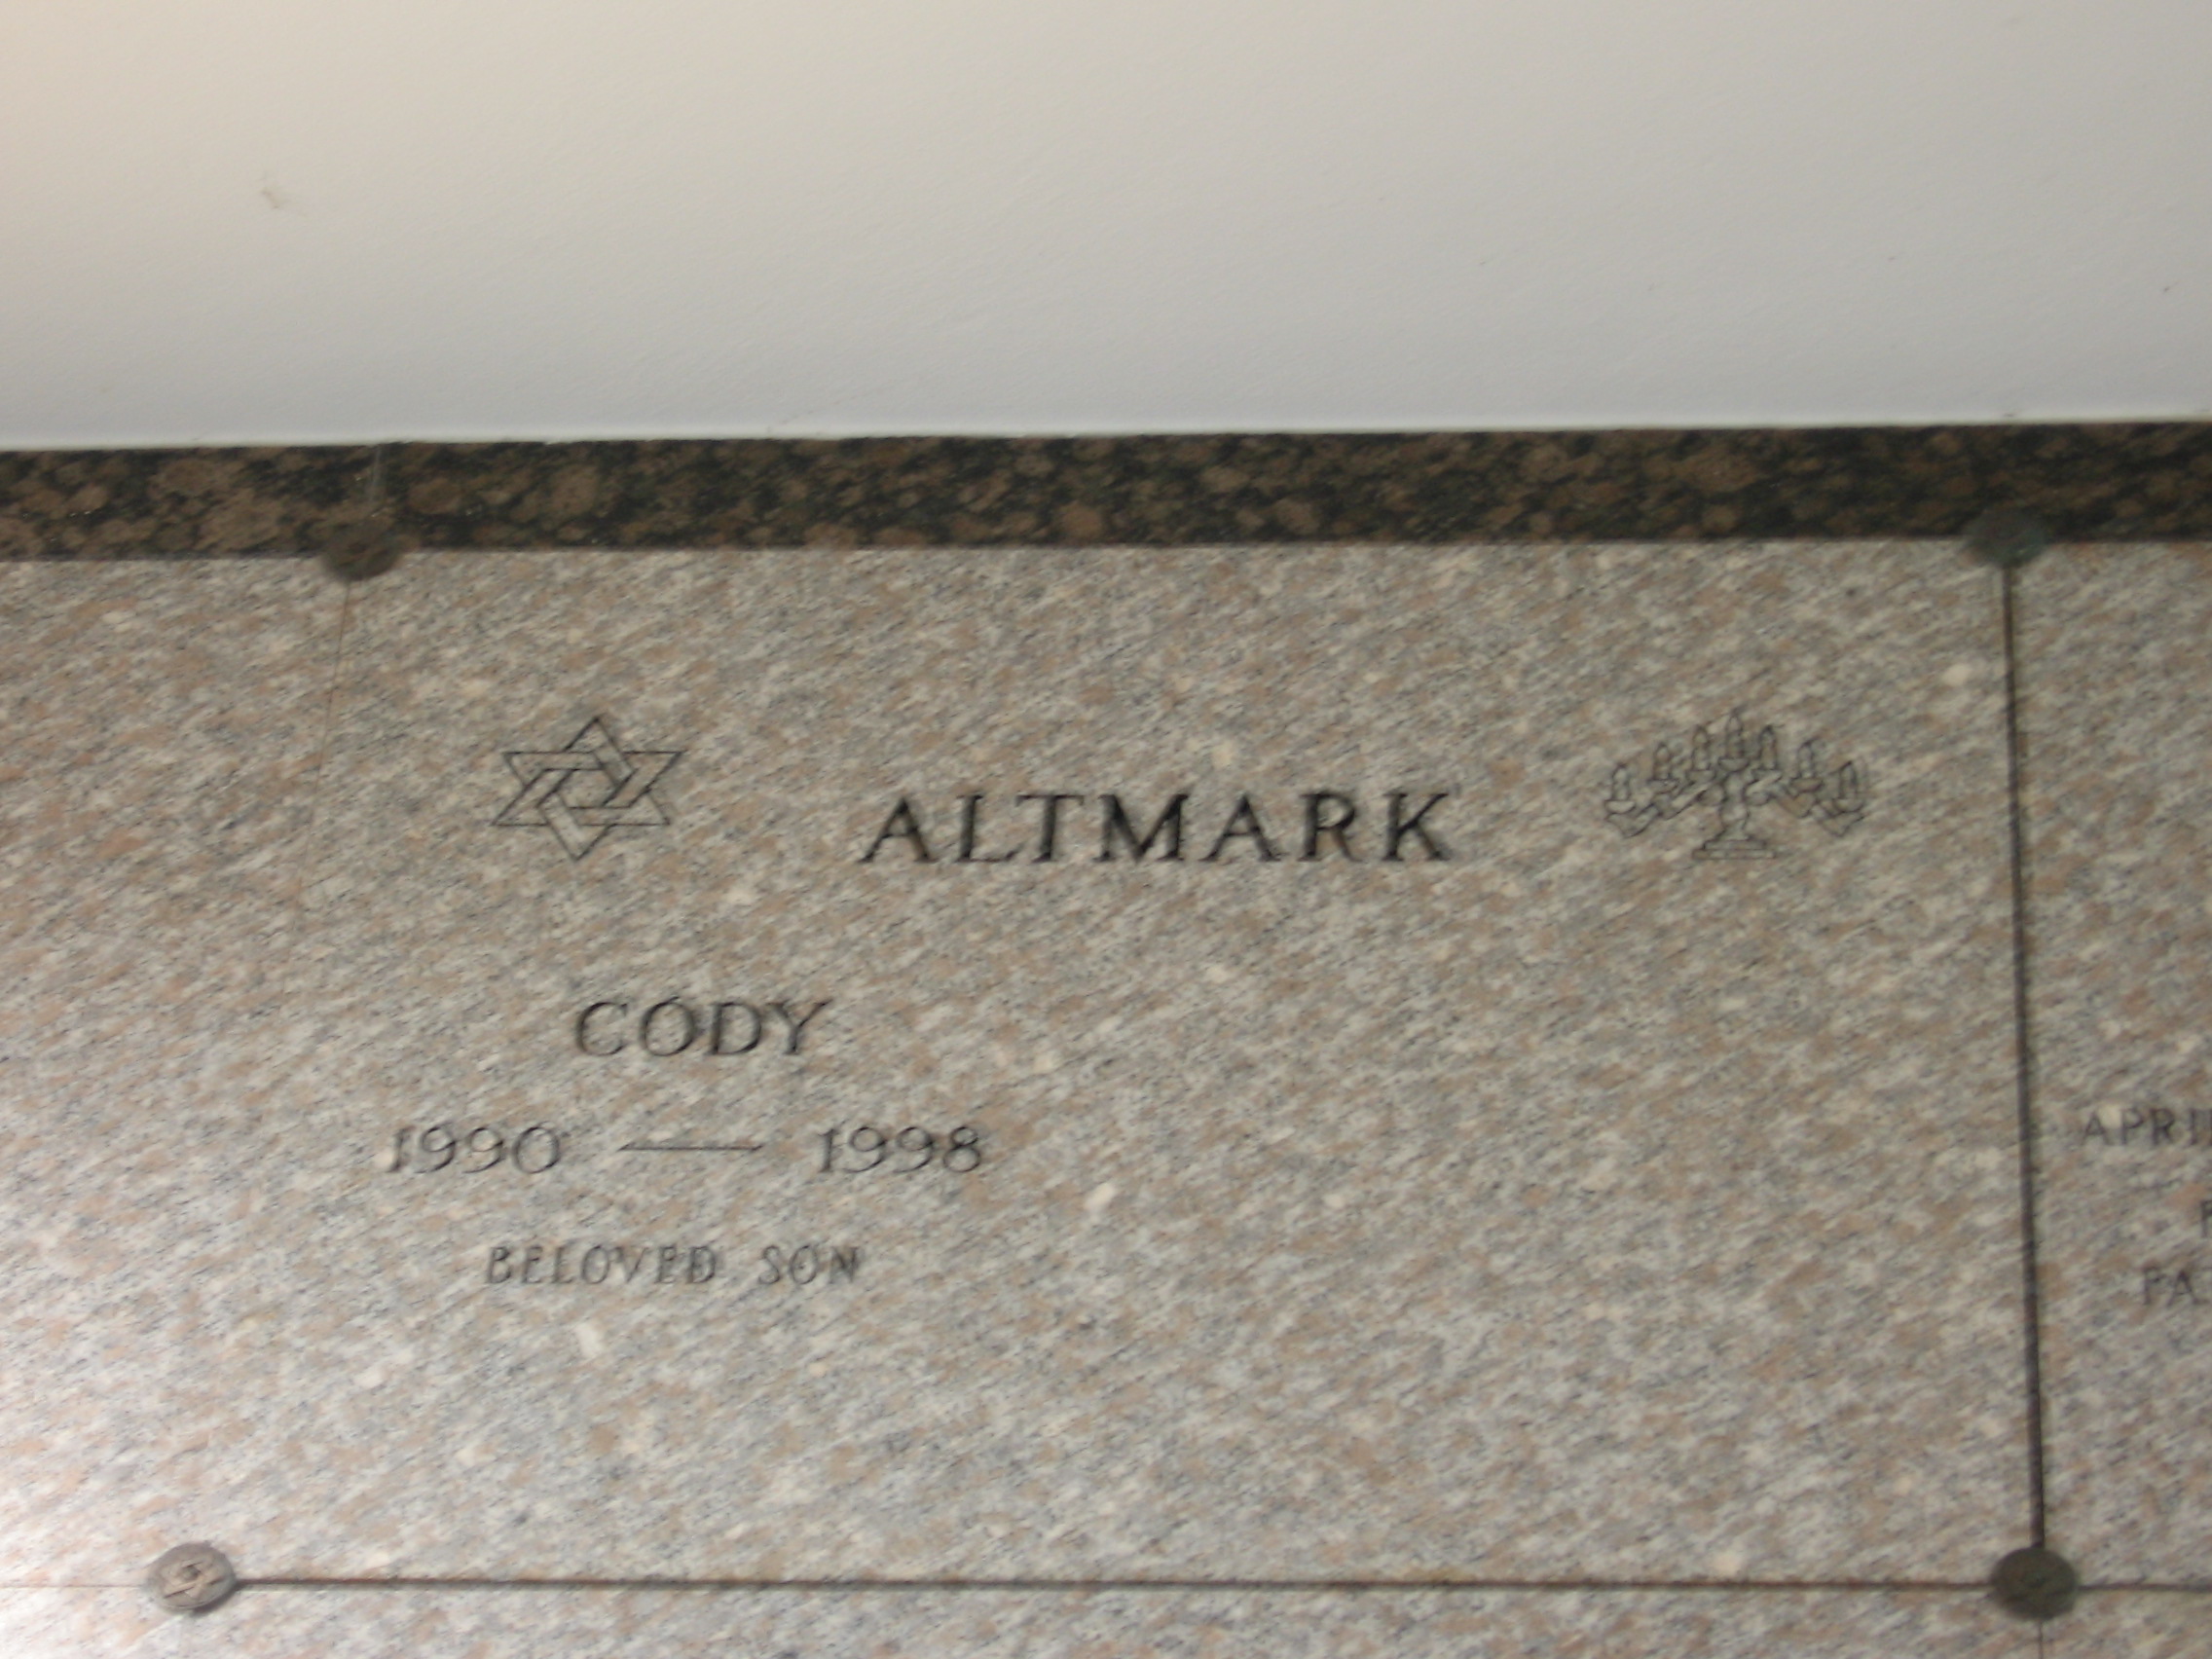 Cody Altmark